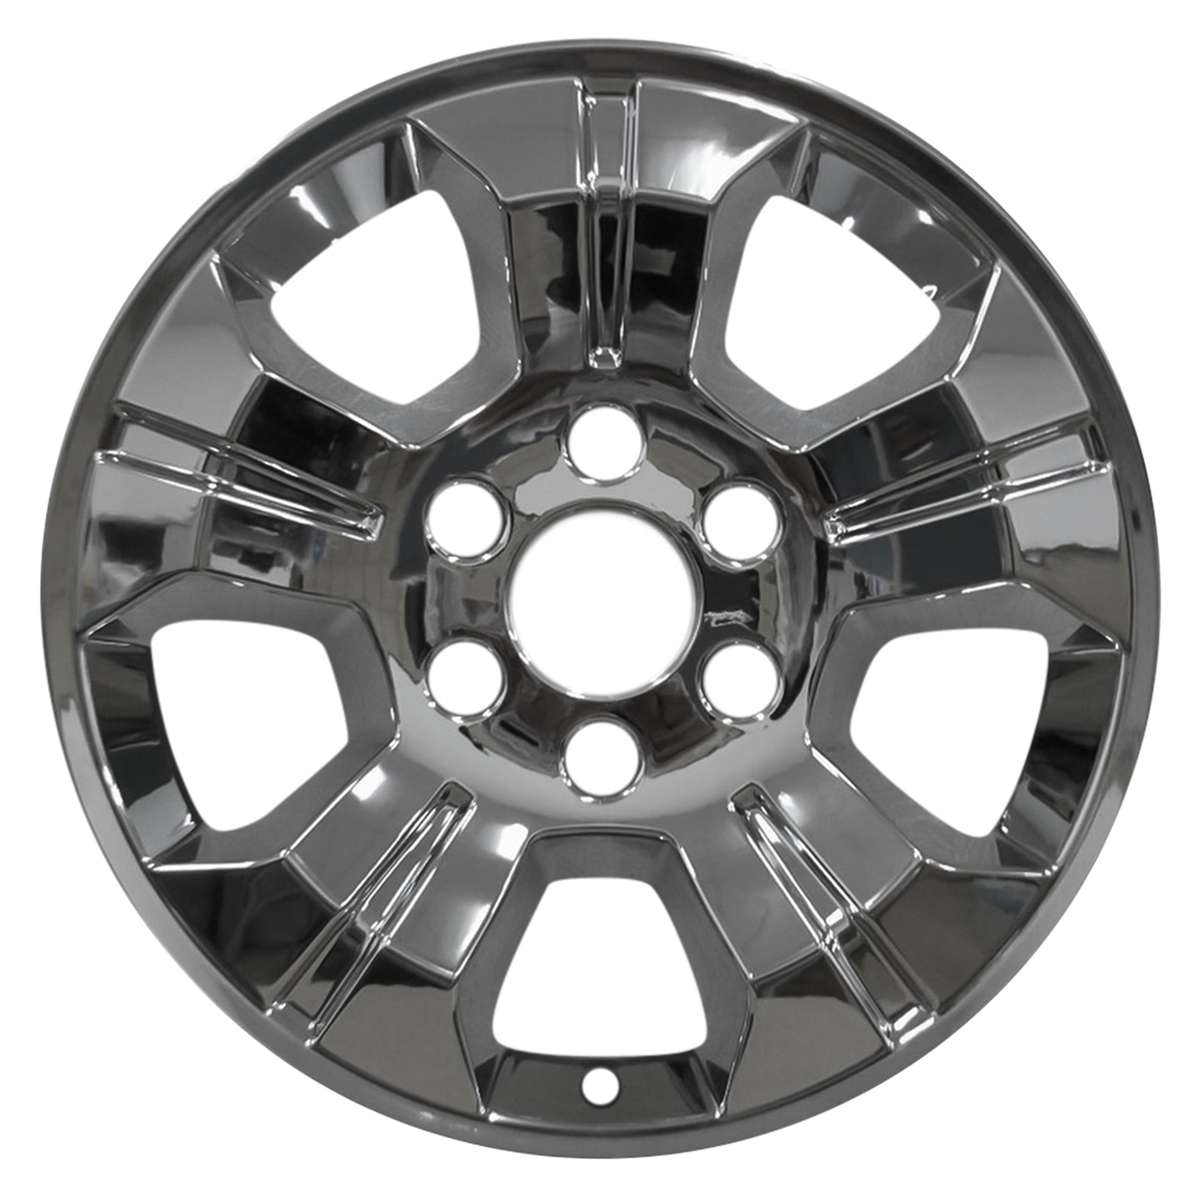 2014 Chevrolet Silverado 1500 18" OEM Wheel Rim W5647LPVD